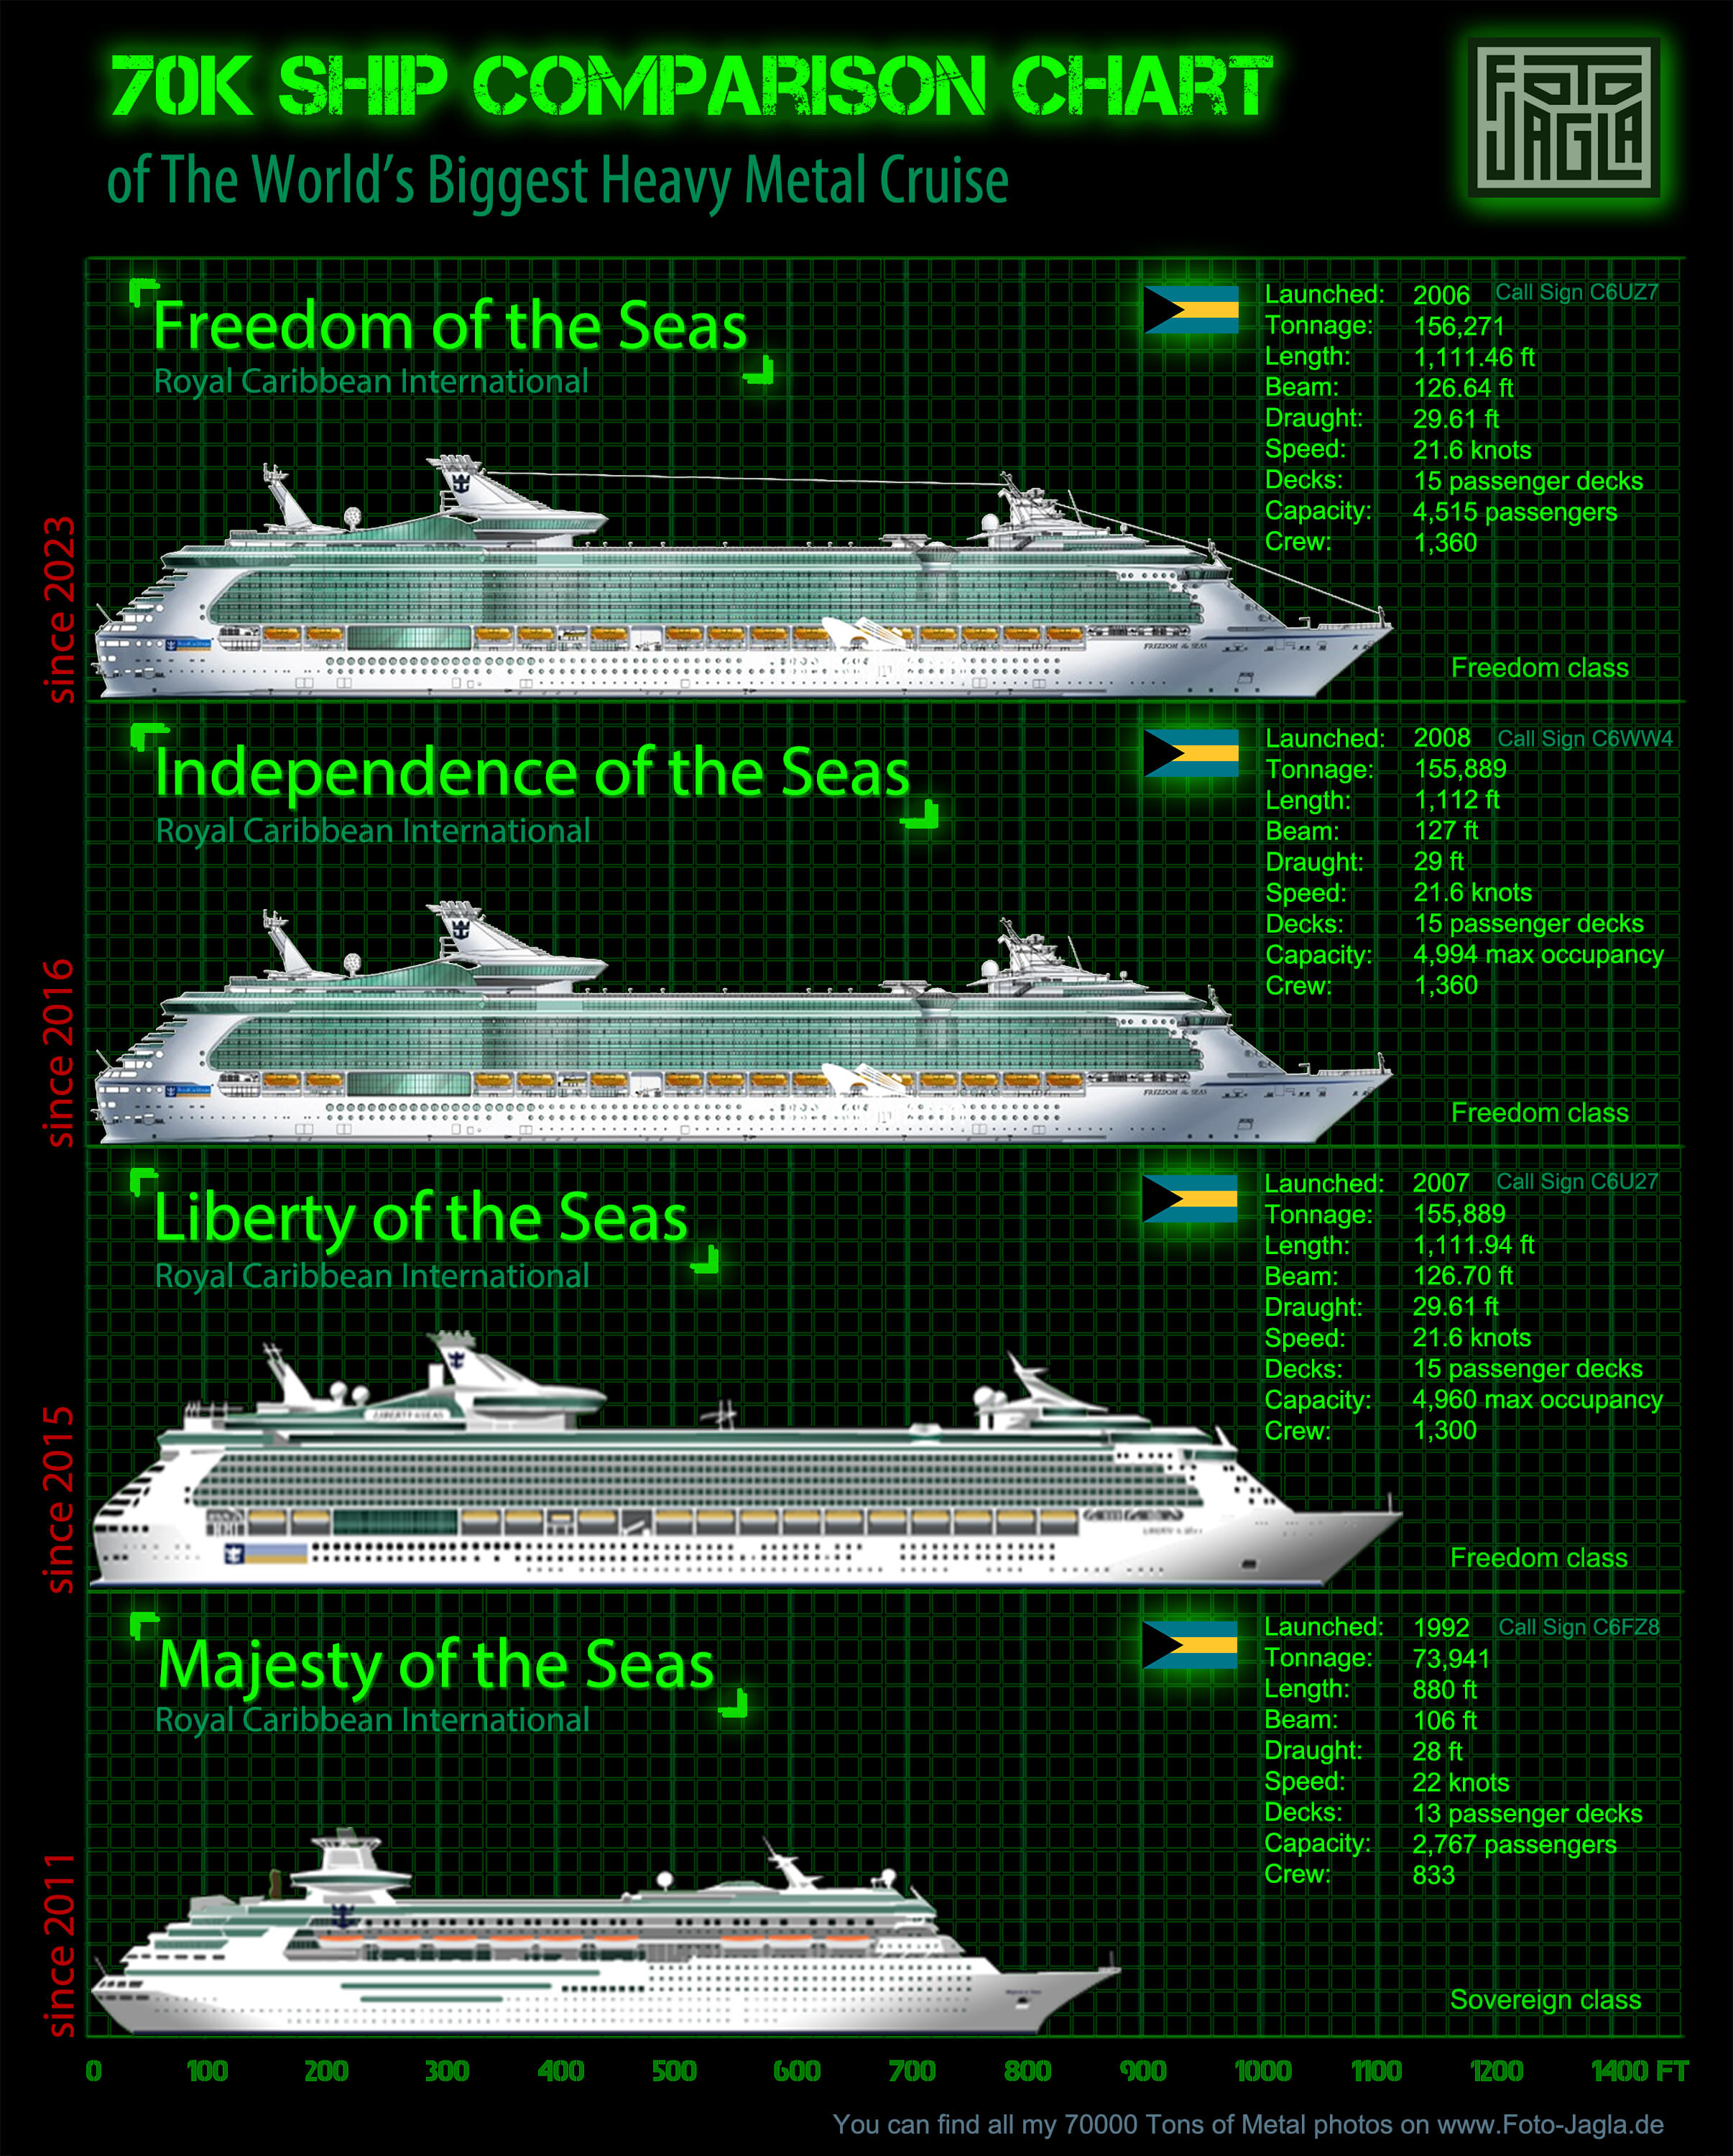 Royal Caribbean International Ship Comparison Chart - Majesty of the Seas, Liberty of the Seas, Freedom of the Seas